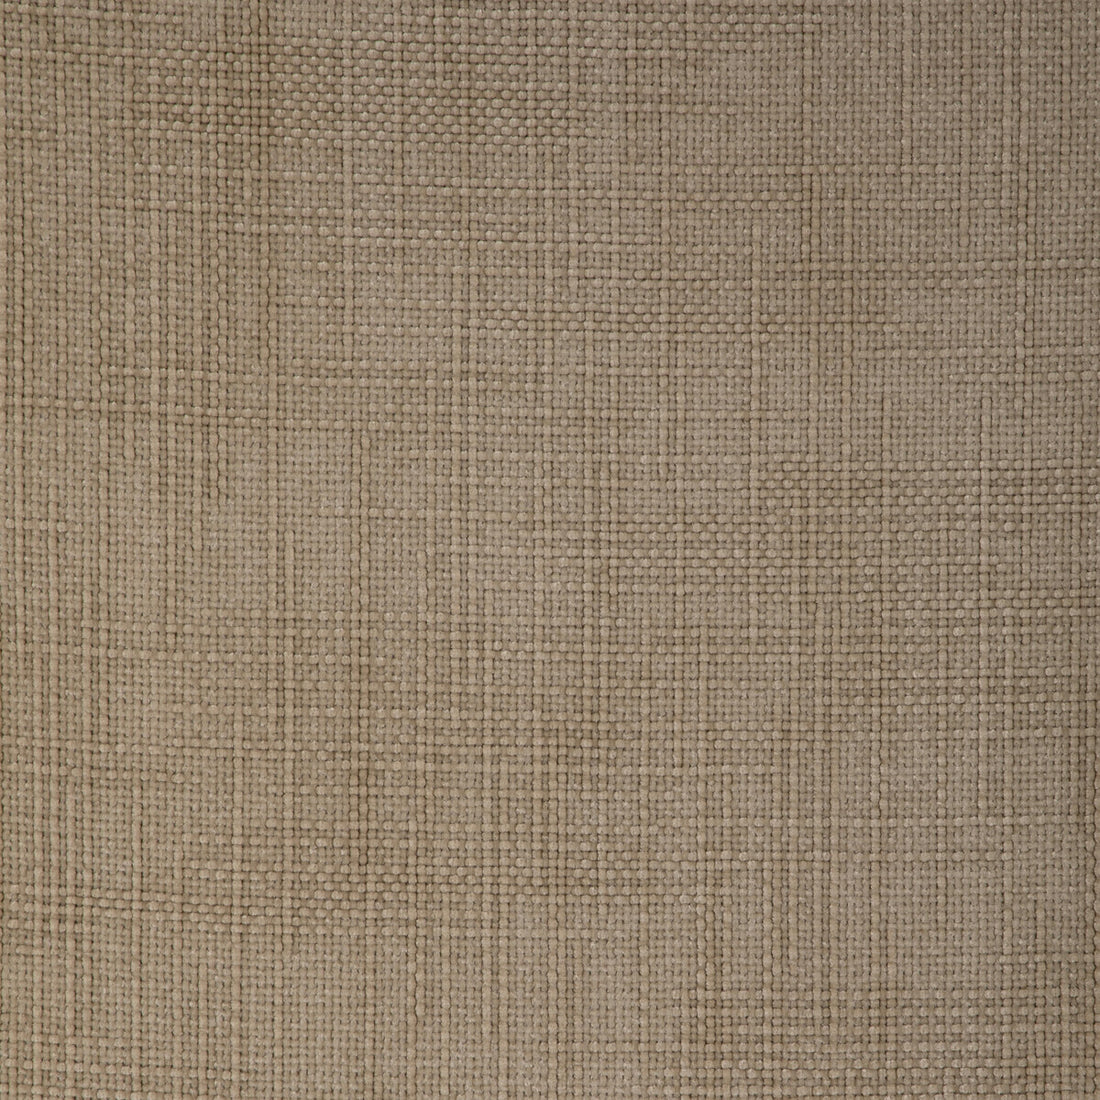 Kravet Smart fabric in 36991-16 color - pattern 36991.16.0 - by Kravet Smart in the Performance Kravetarmor collection